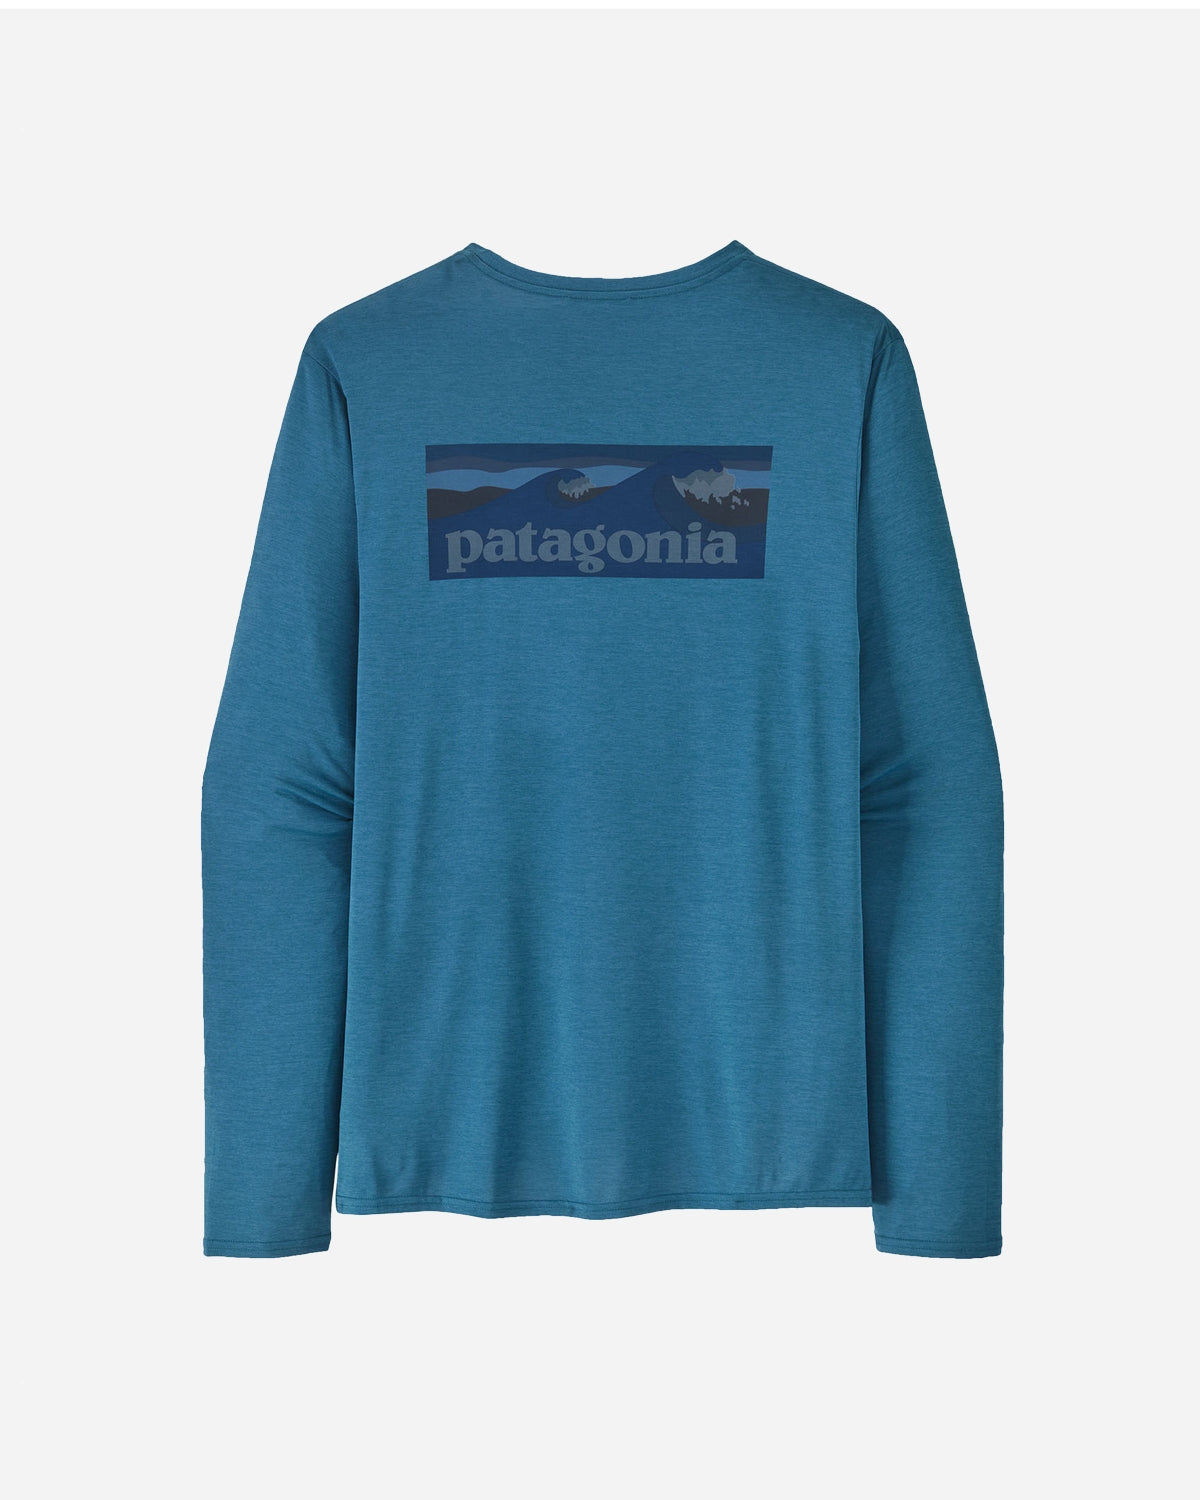 M's L/S Cap Cool Daily Graphic Shirt - Wavy Blue X-Dye - Patagonia - Munkstore.dk